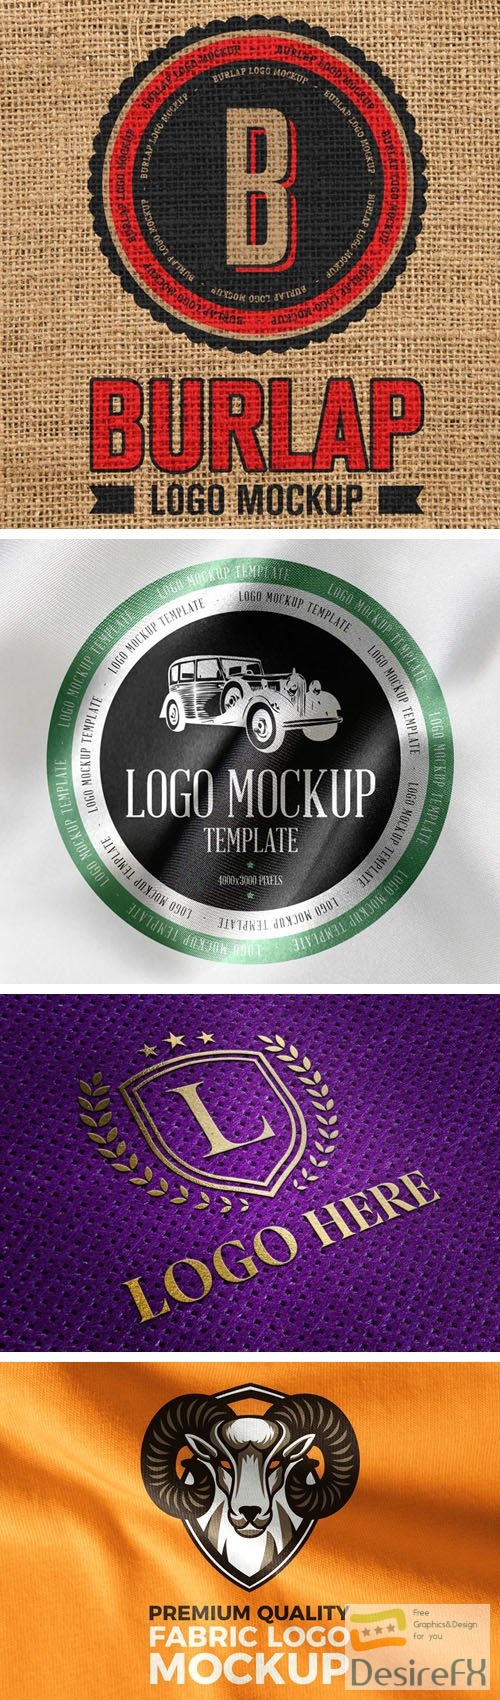 8 Realistic 3D Premium Quality Logos PSD Mockups Templates